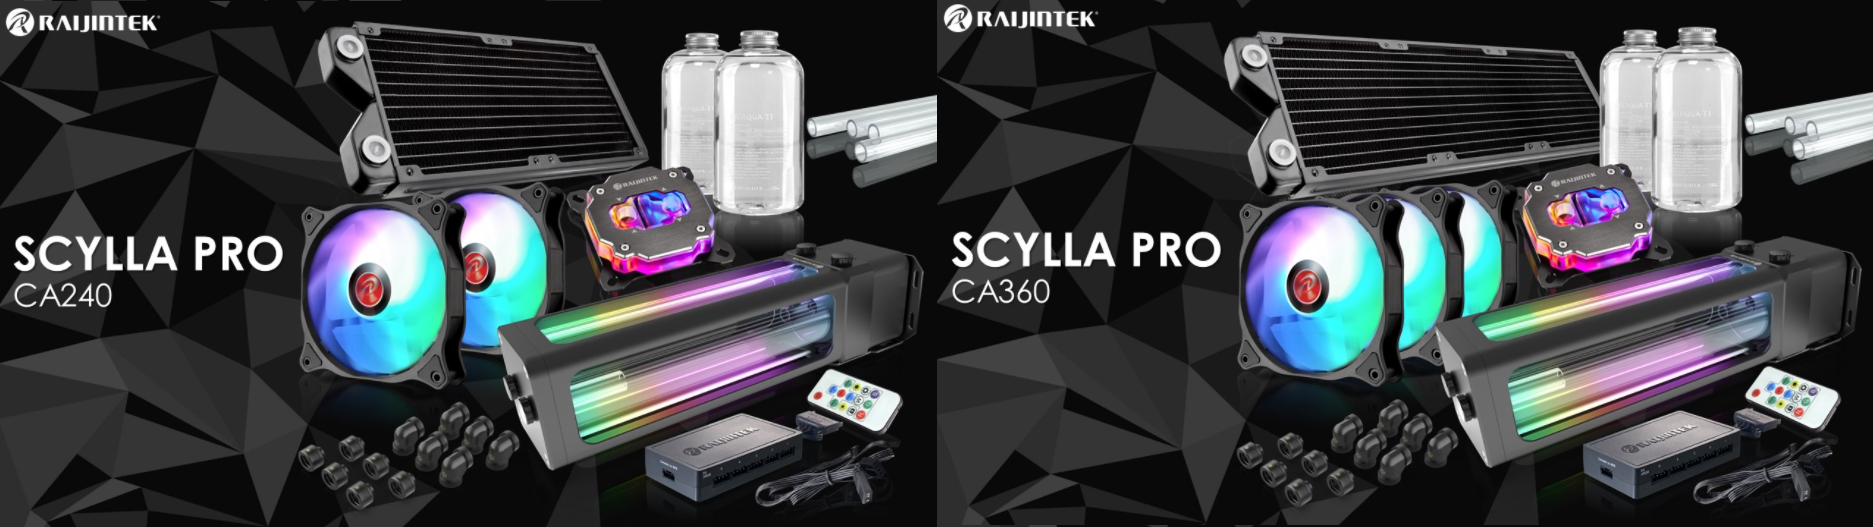 Raijintek présente ses nouveaux kit watercooling custom Scylla Pro CA240/CA360